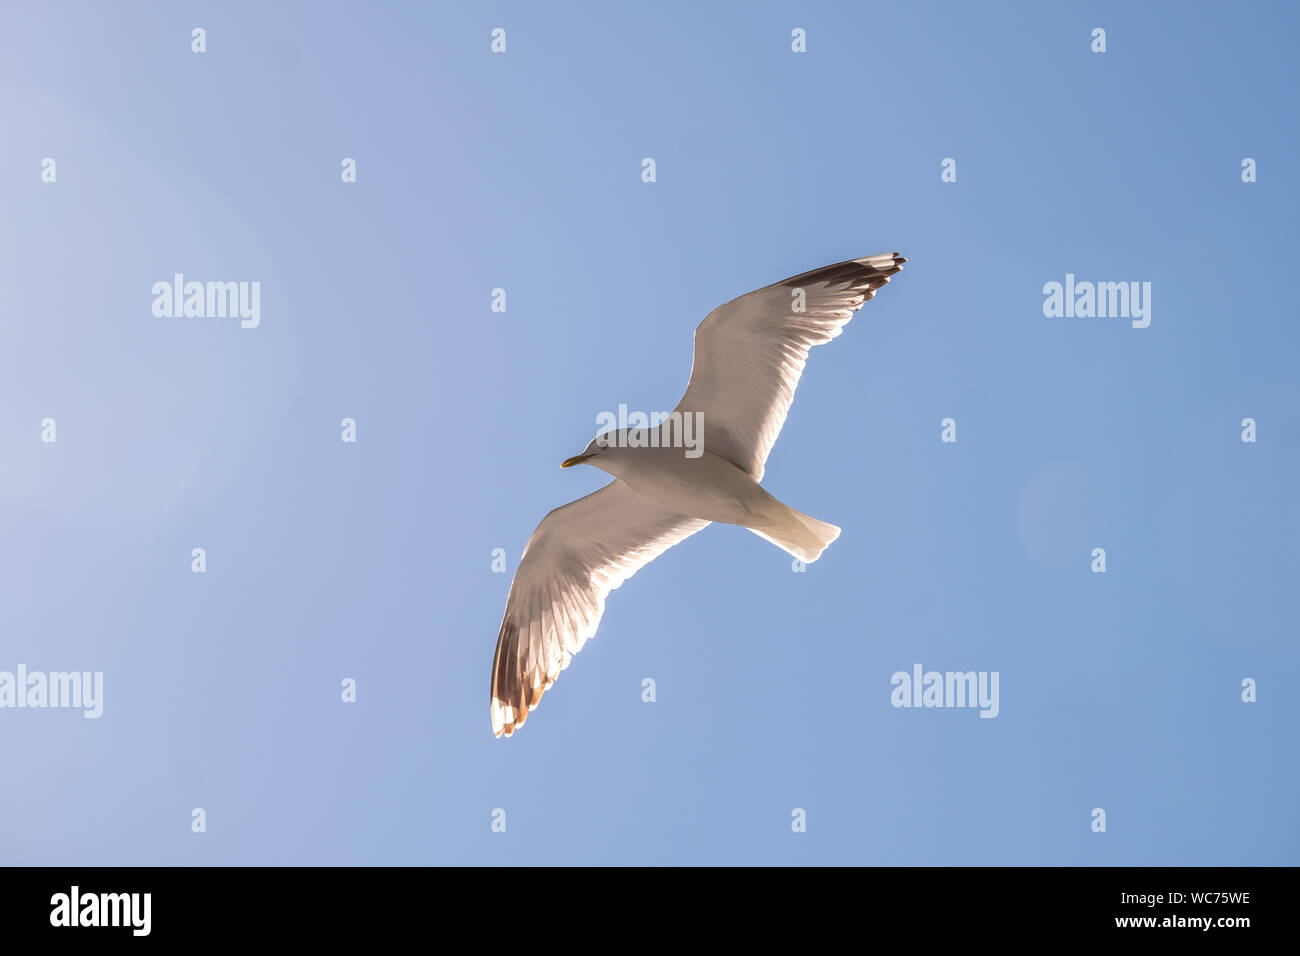 flying mantle seagull, Larus marinus, spread wings, blue sky, bakka, Sogn og Fjordane, Norway, Scandinavia, Europe, NOR, travel, tourism, destination, Stock Photo